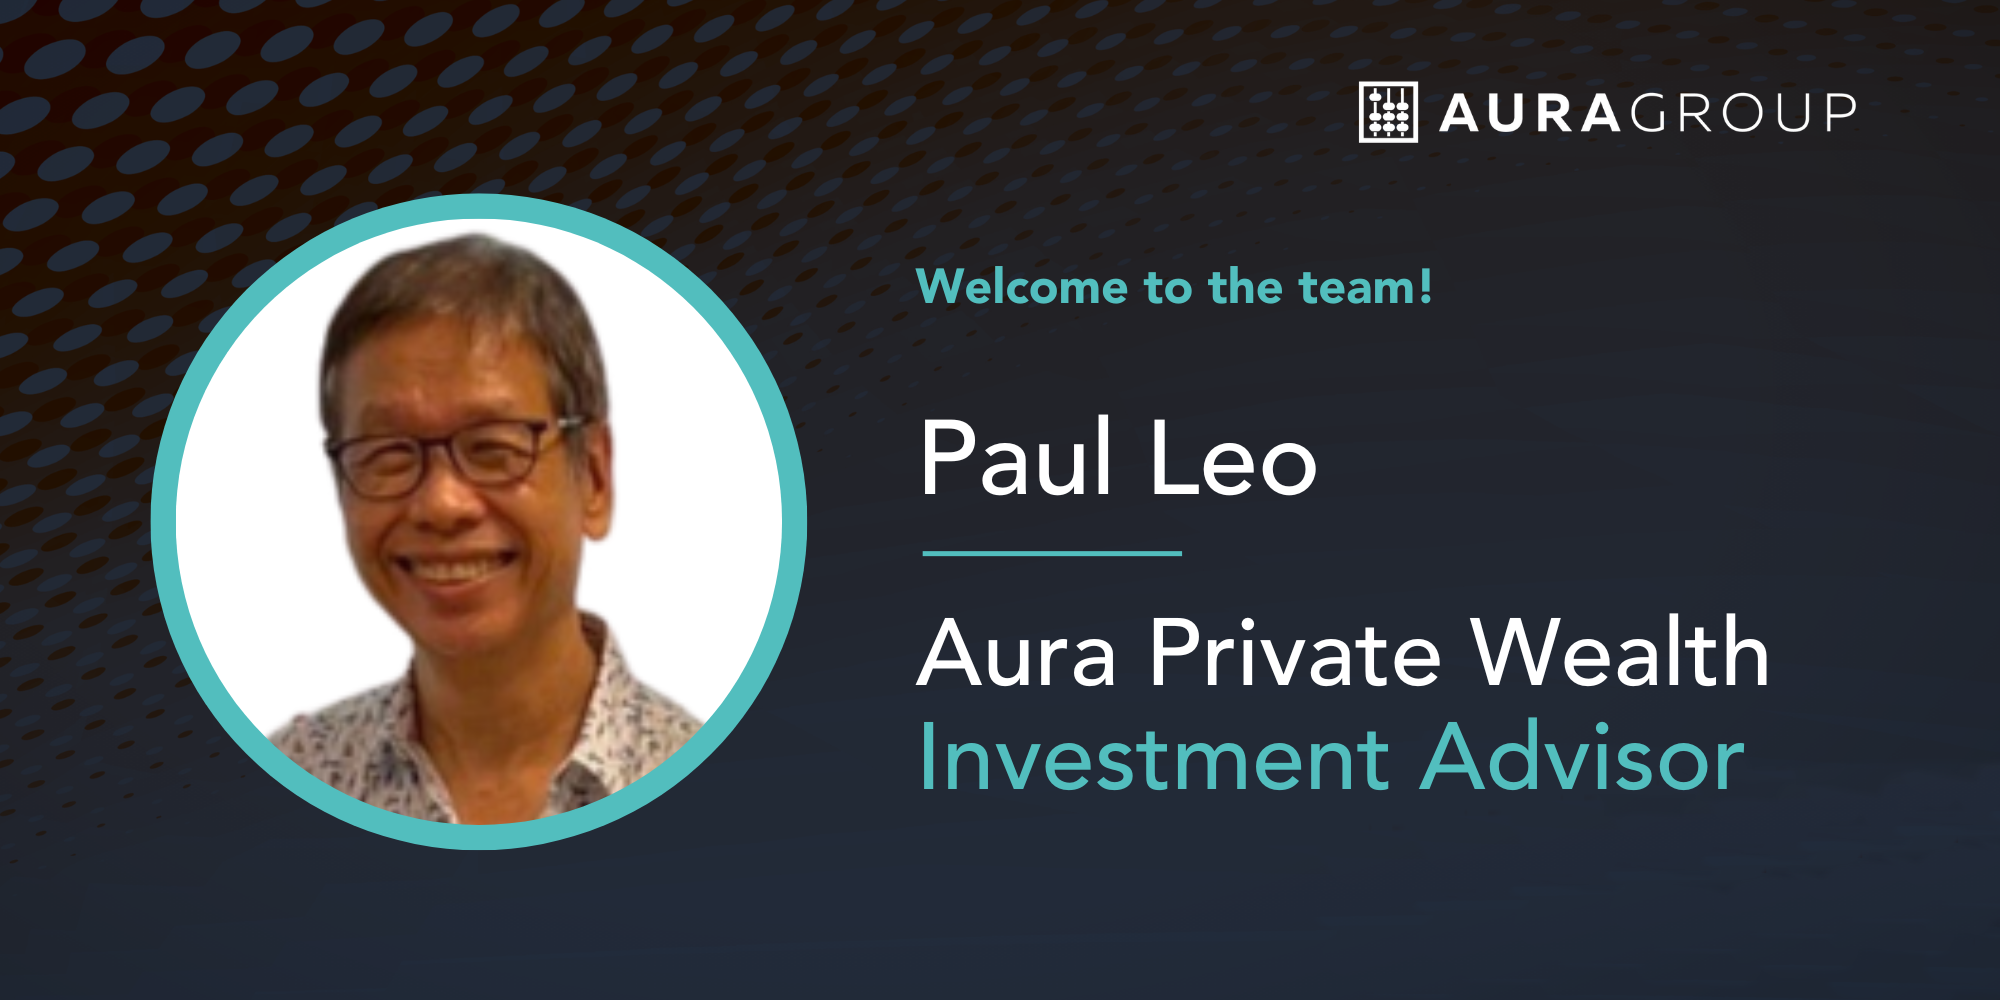 Paul Leo, Investment Advisor, Aura Private Wealth